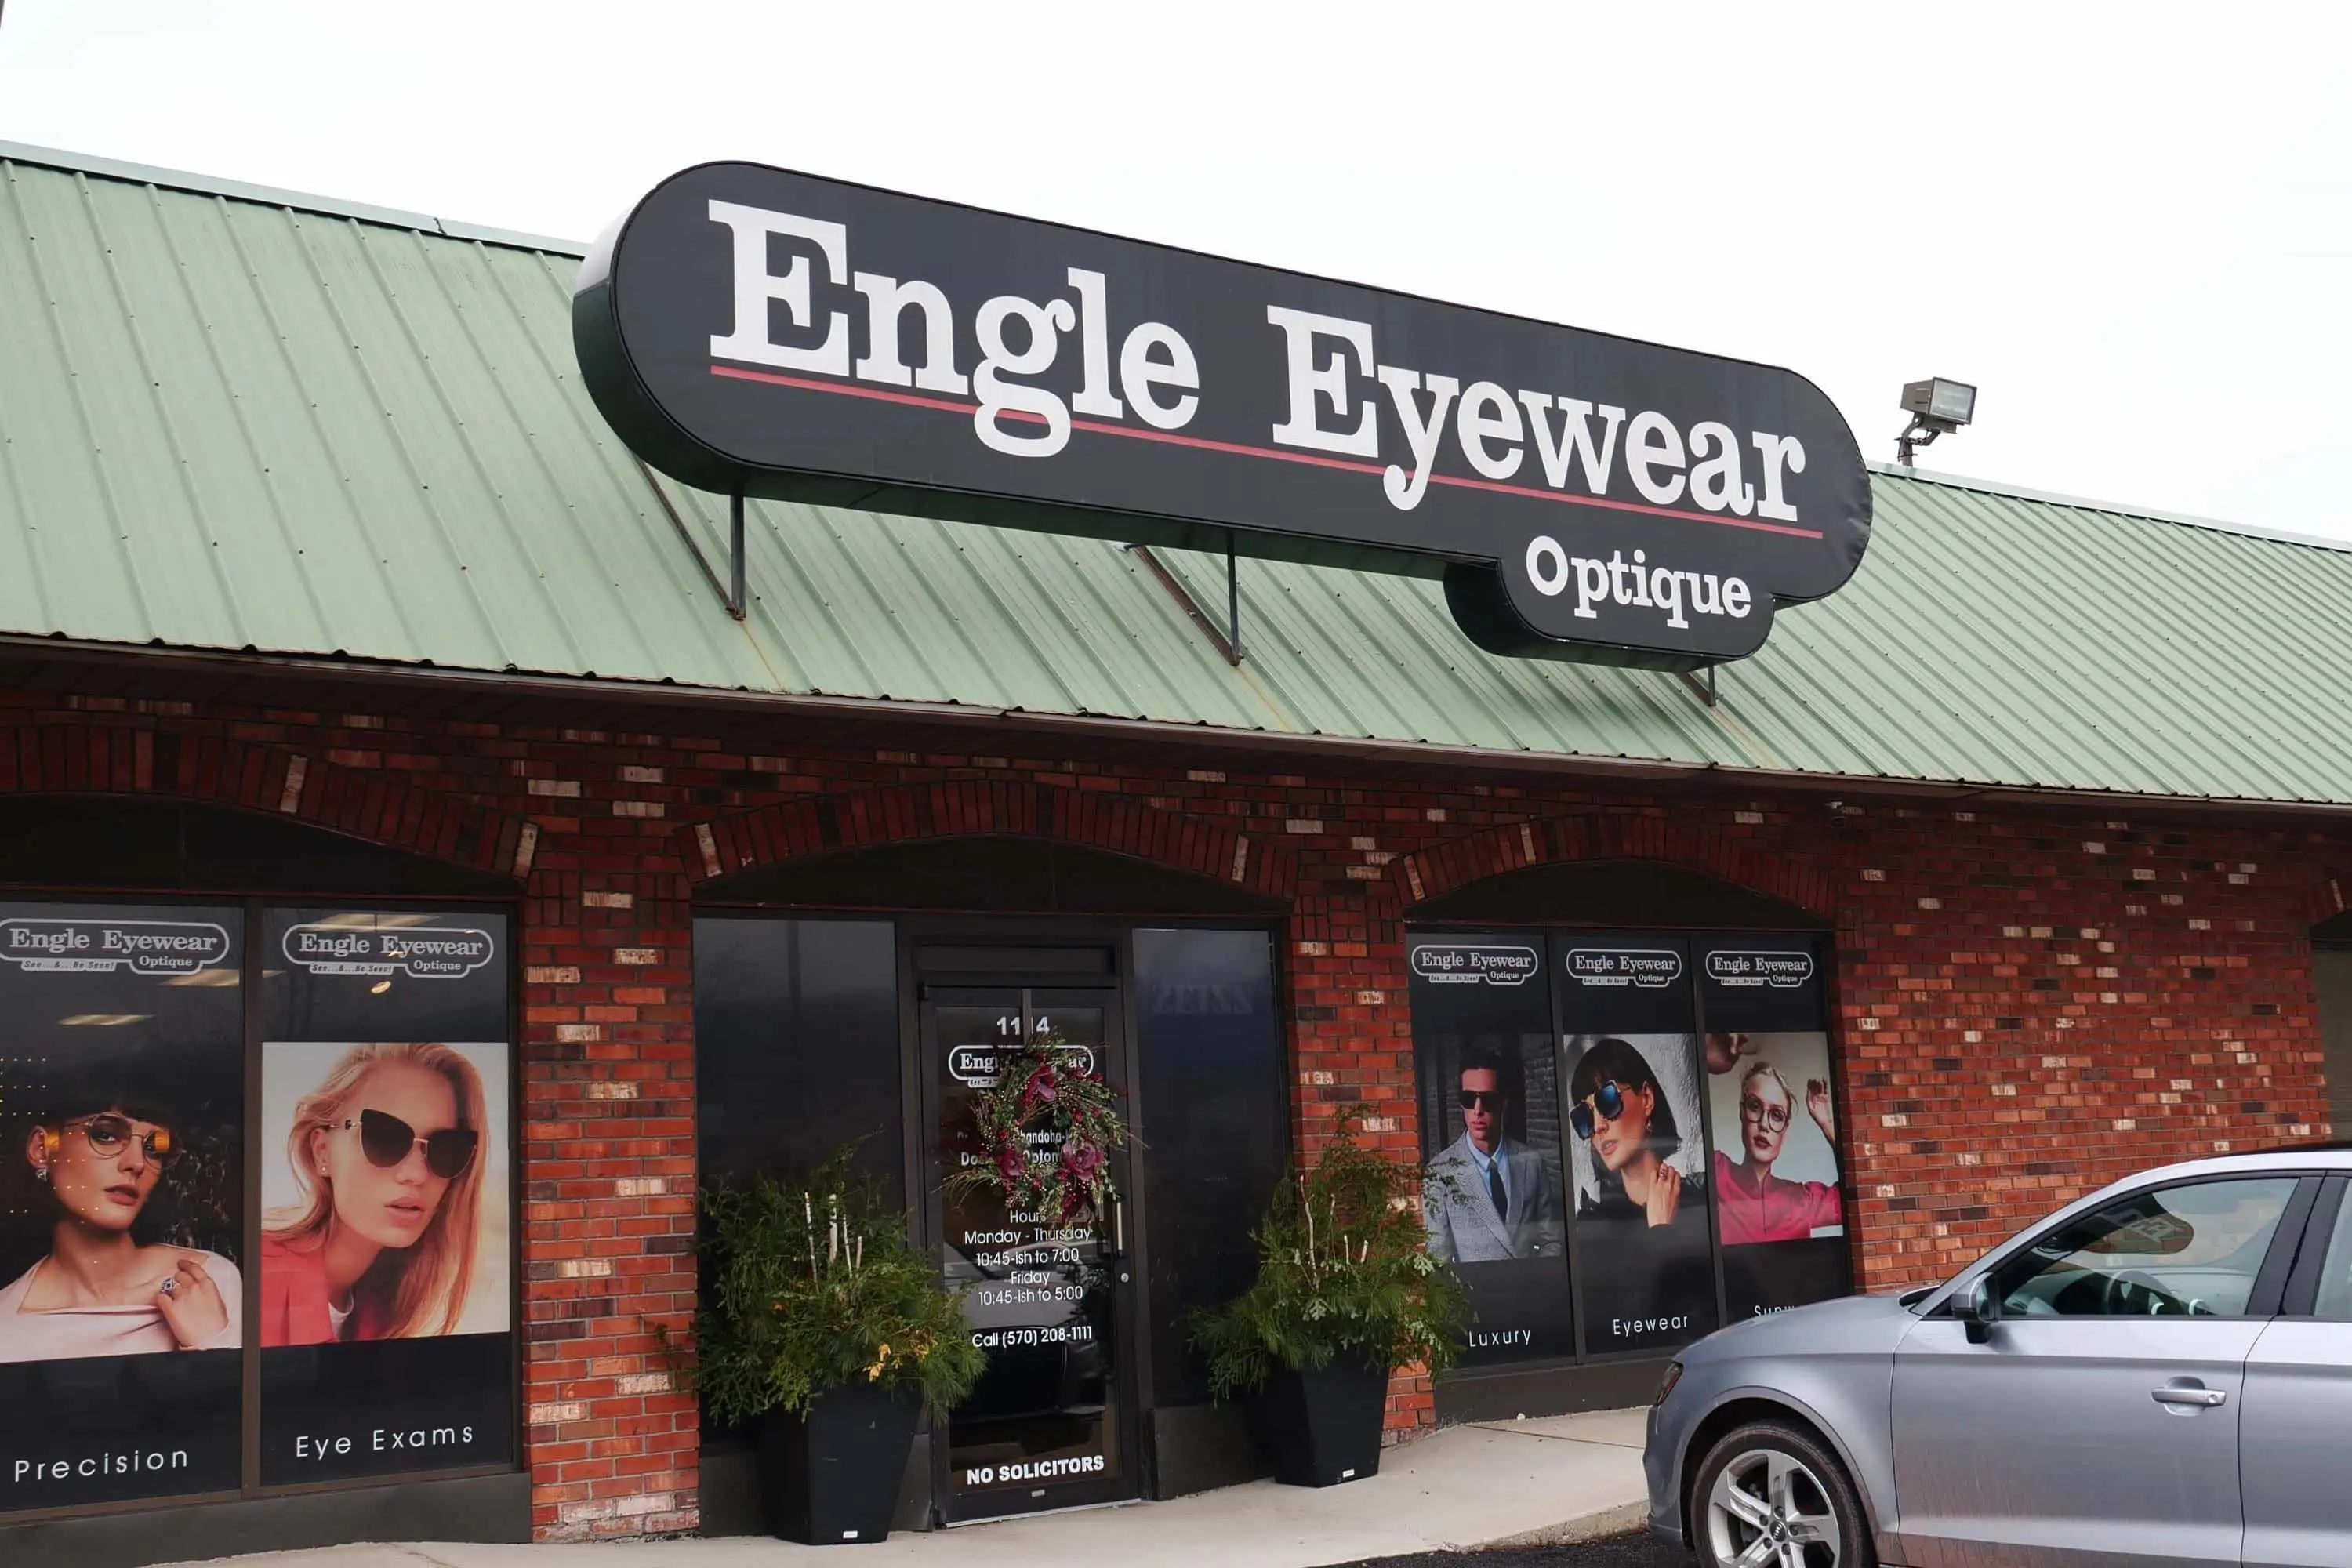 Engle Eyewear